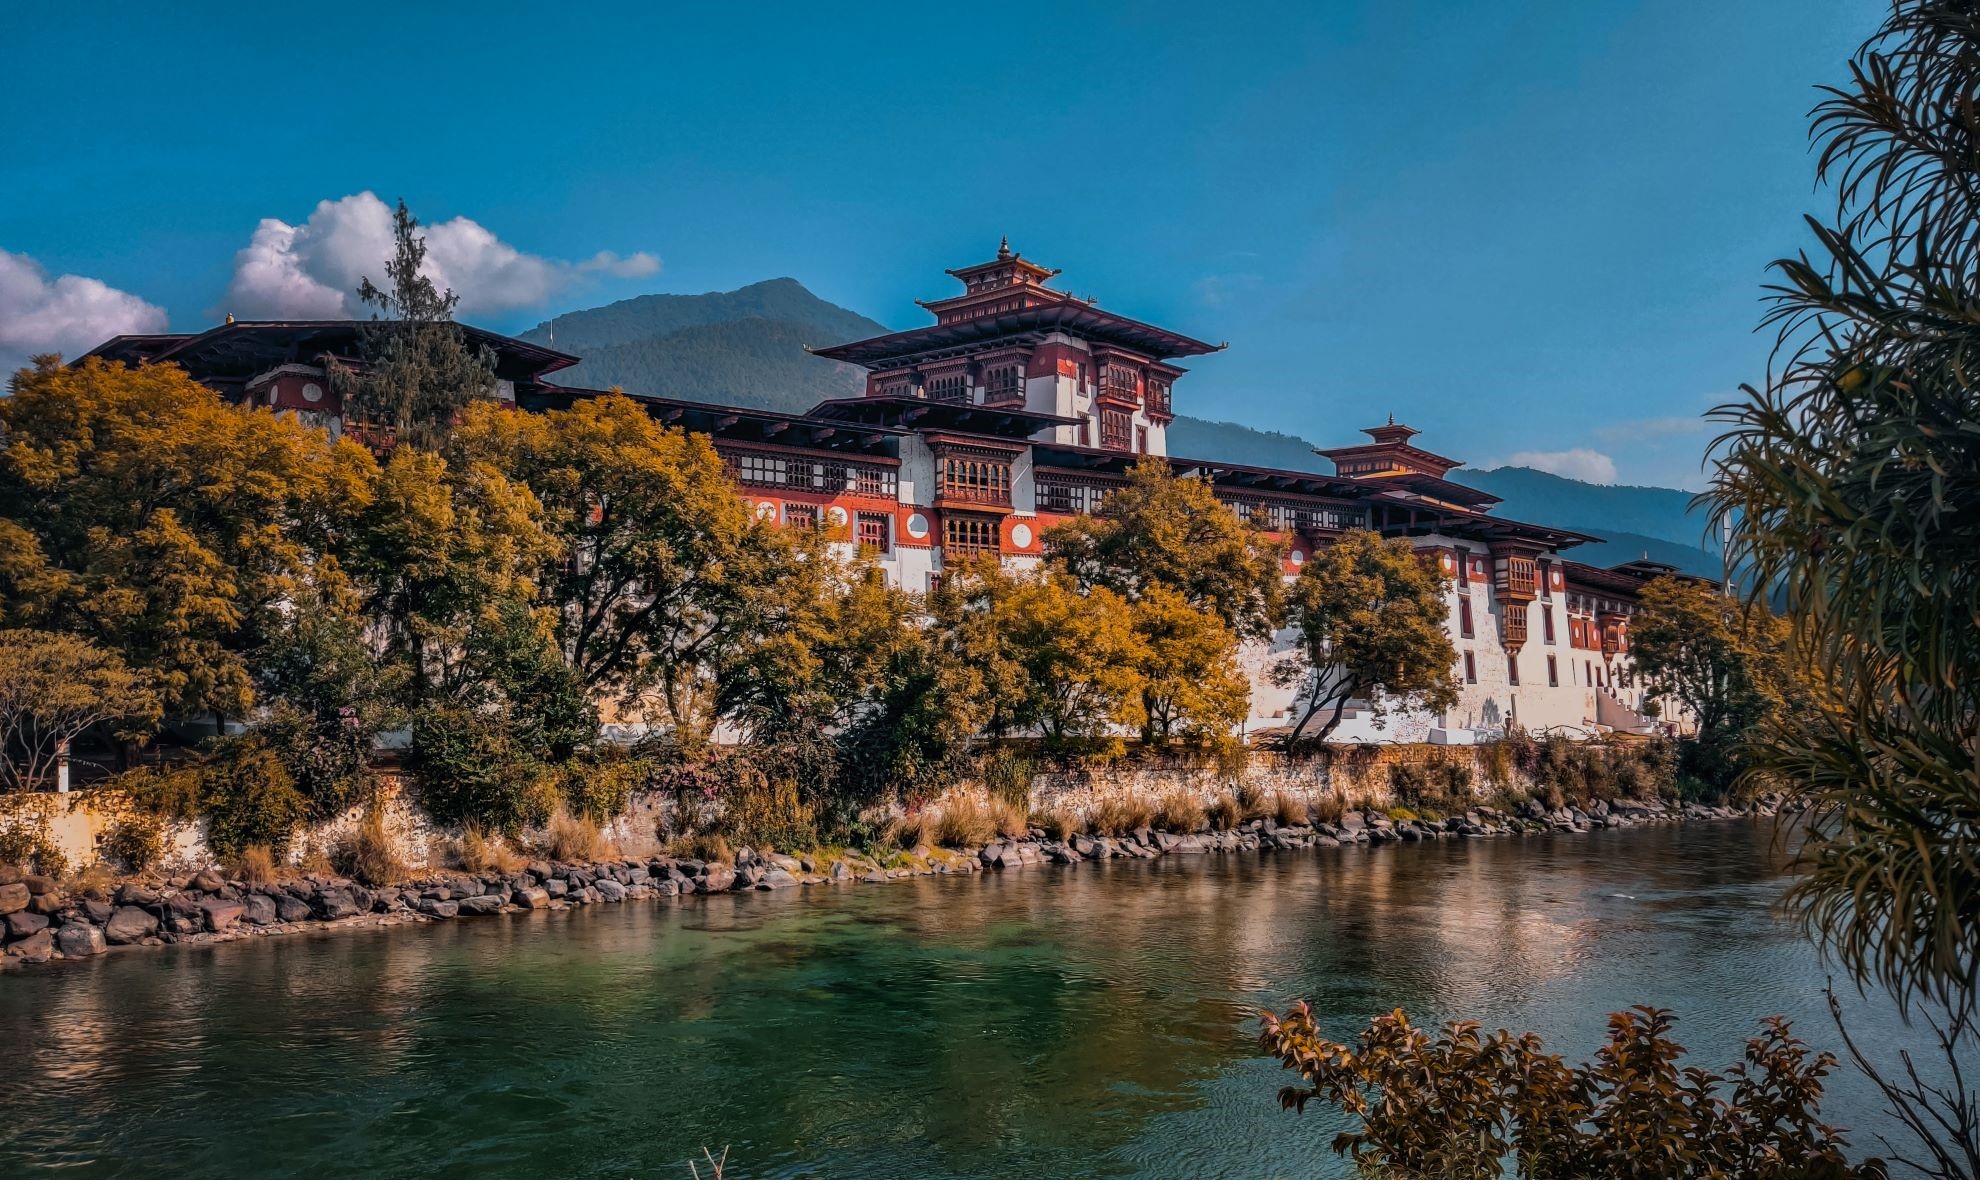 <!-- wp:paragraph -->
<p>The Iconic Punakha Dzong</p>
<!-- /wp:paragraph -->